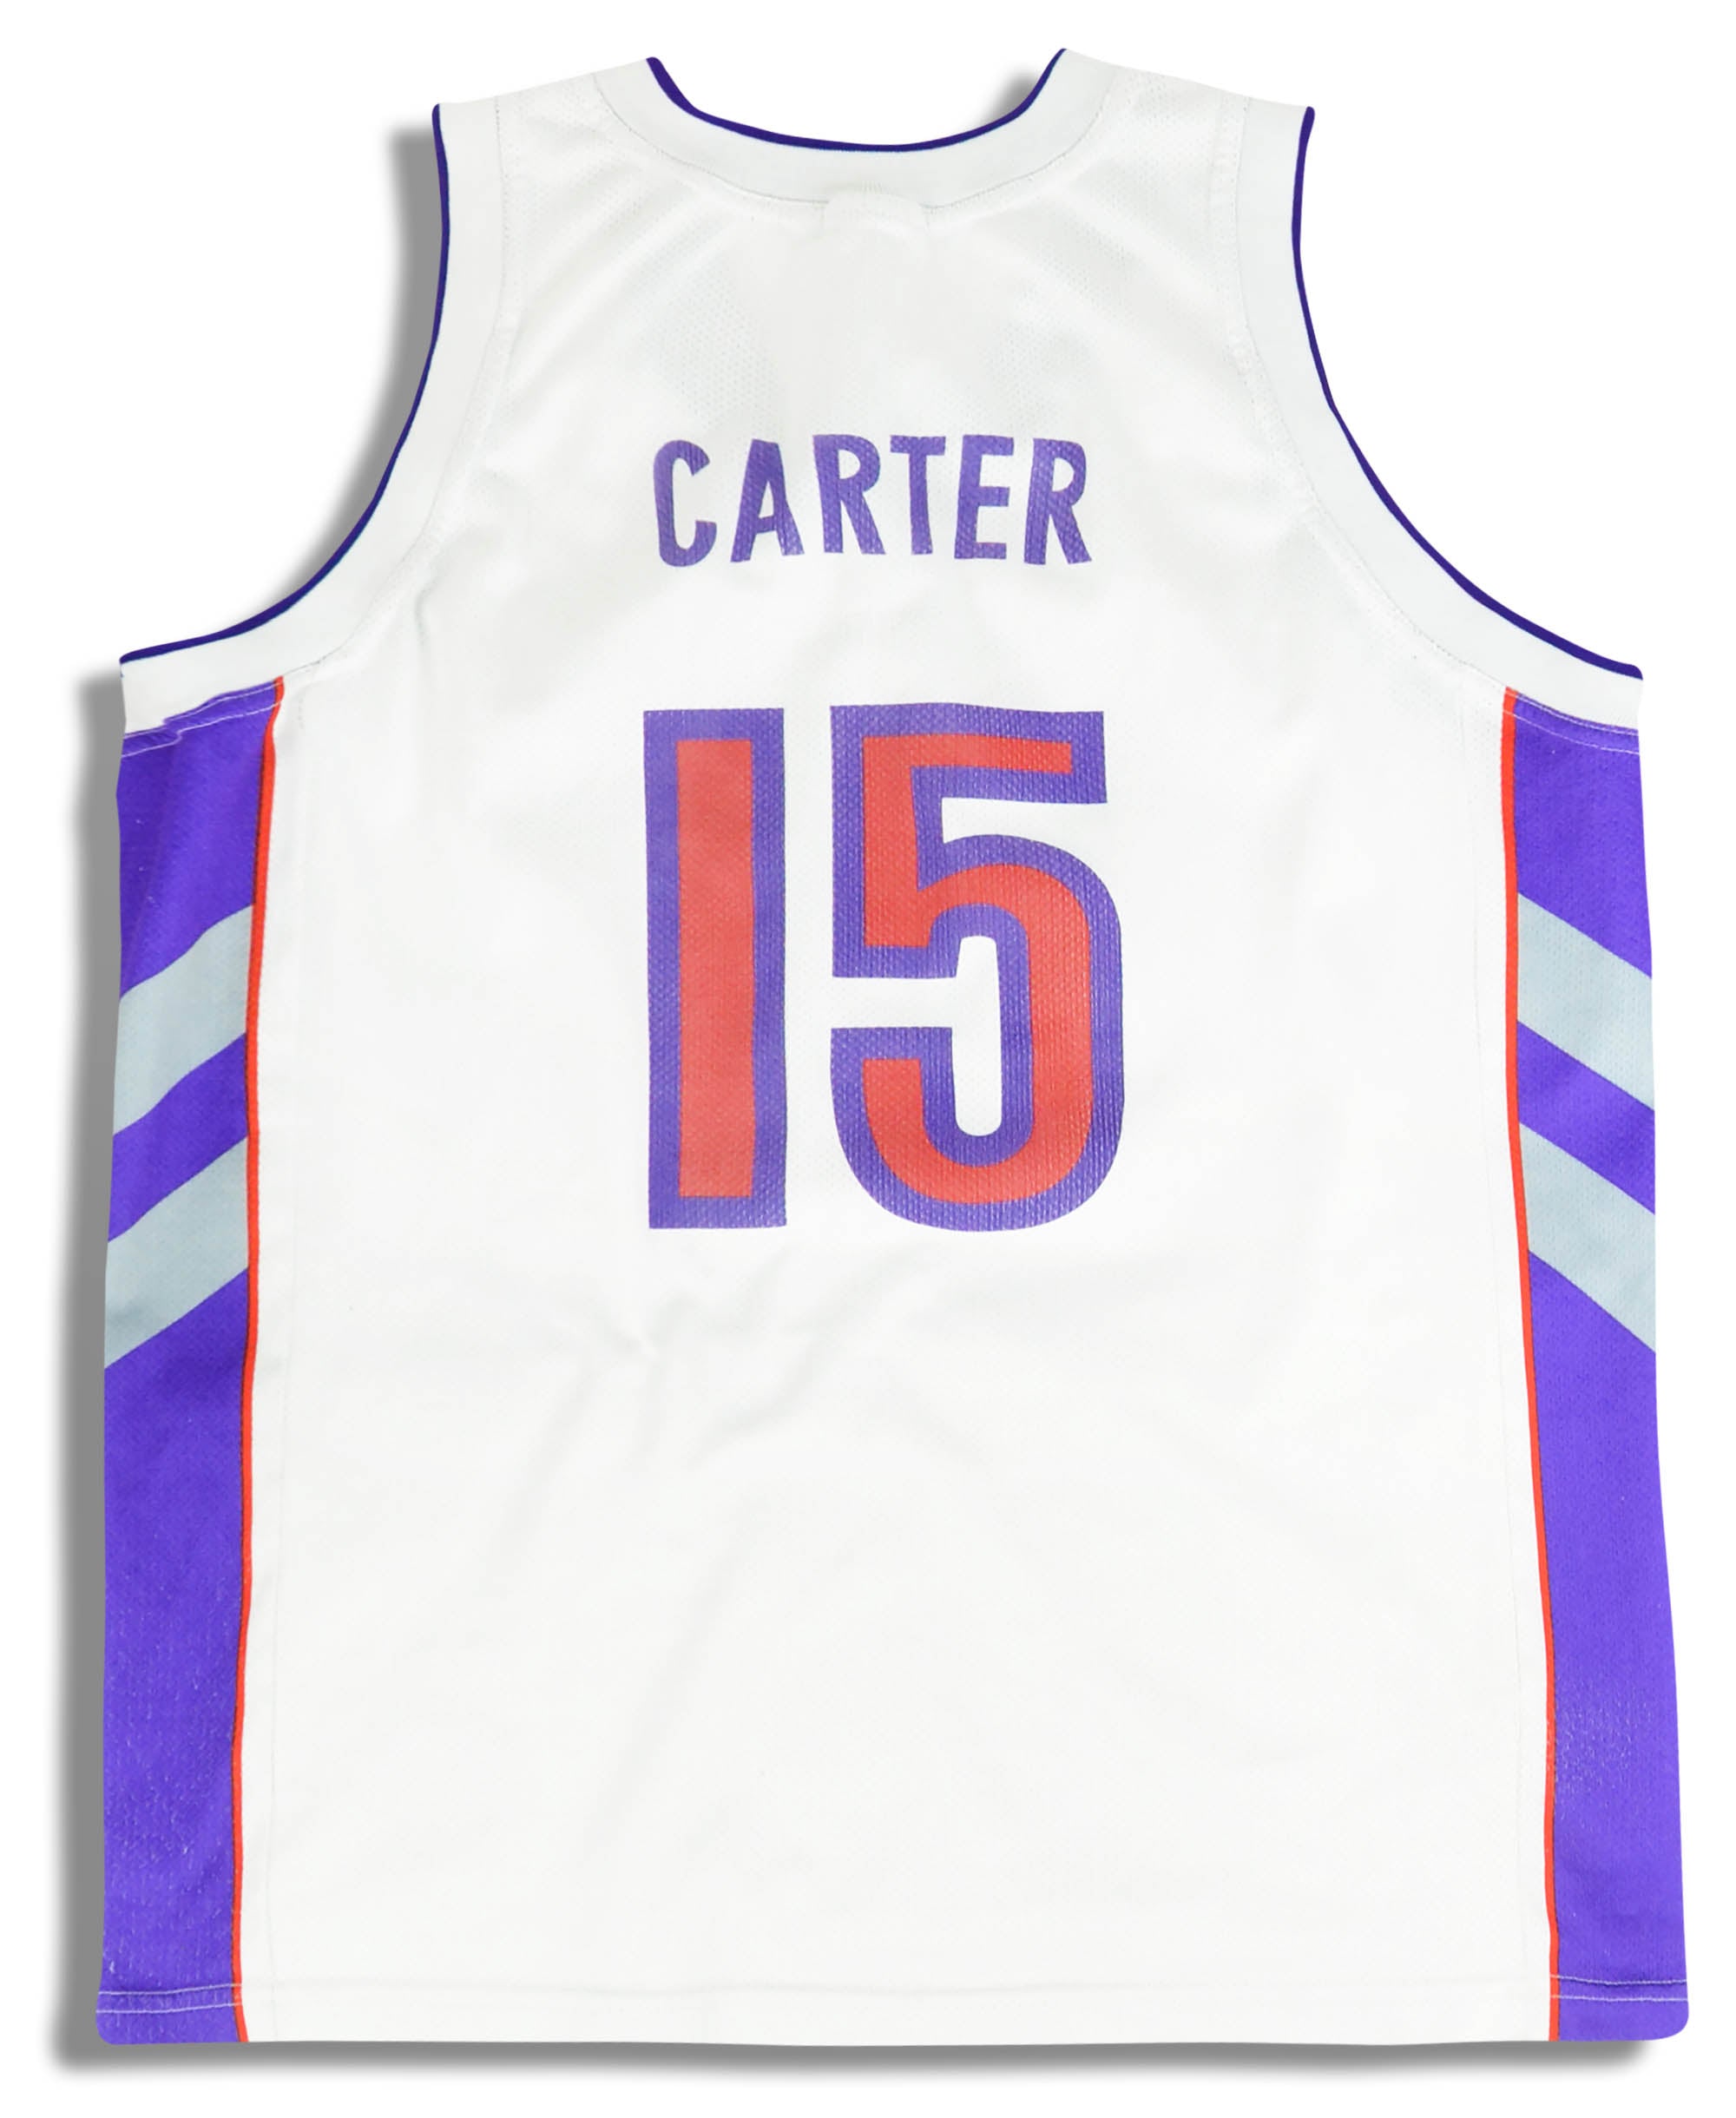 1999 NBA Rookie Of the Year Toronto Raptors Vince Carter Jersey